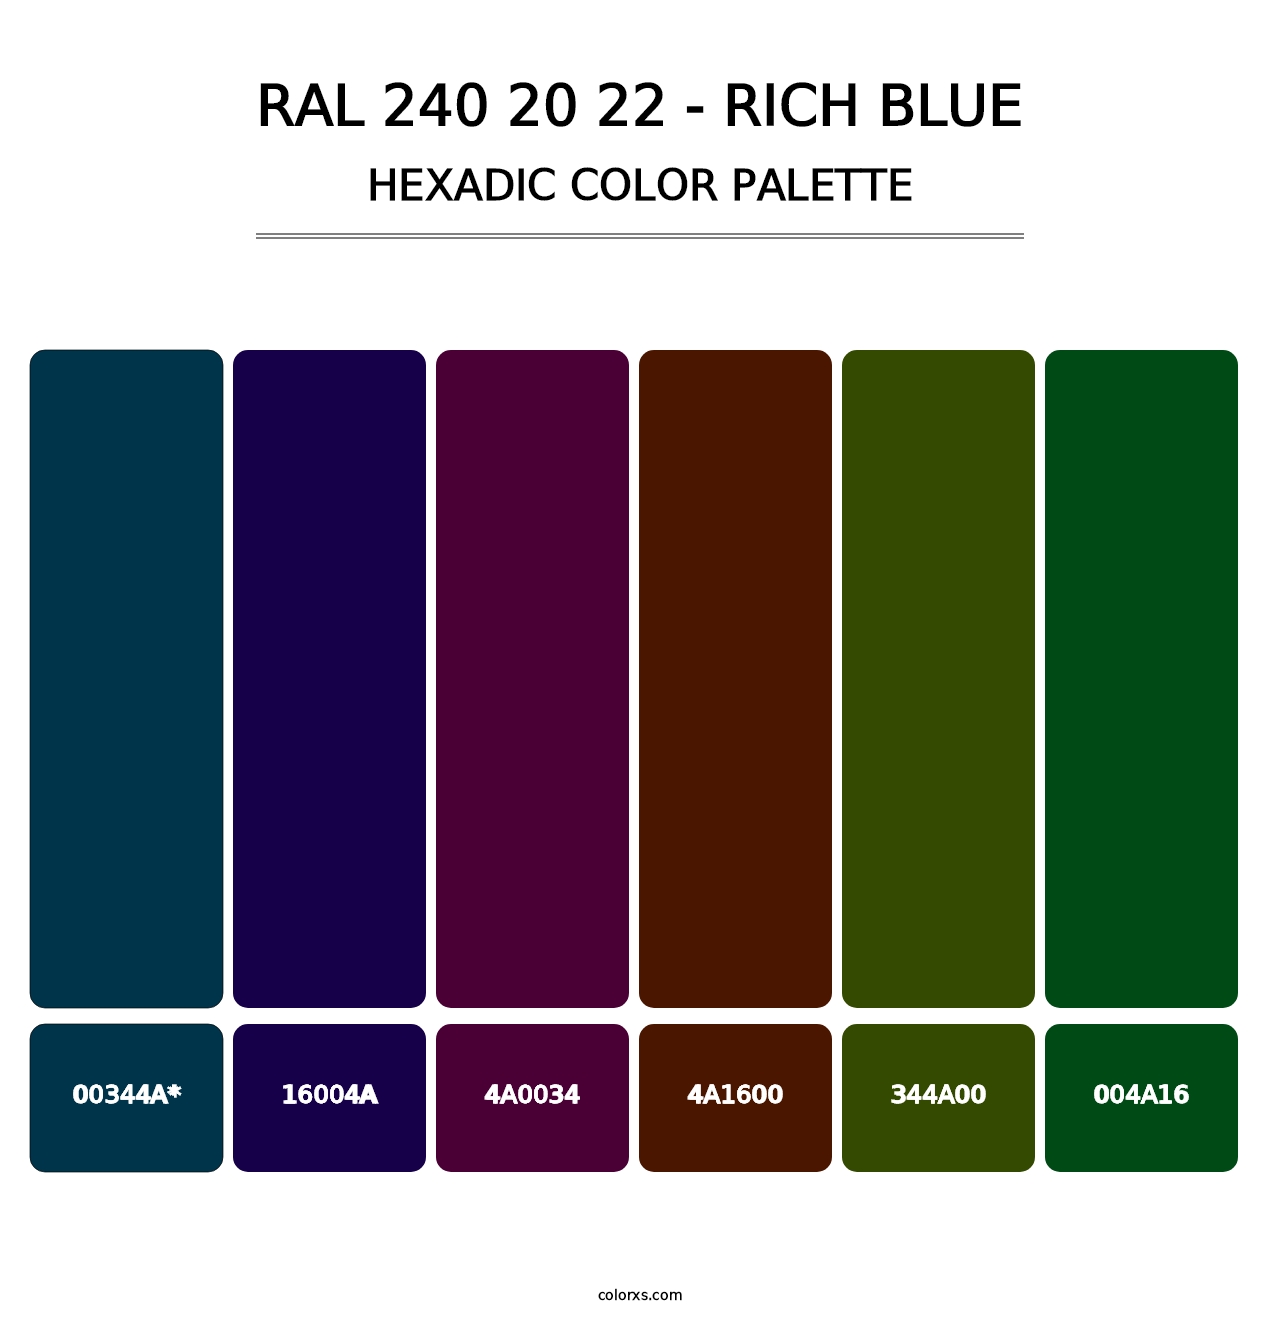 RAL 240 20 22 - Rich Blue - Hexadic Color Palette